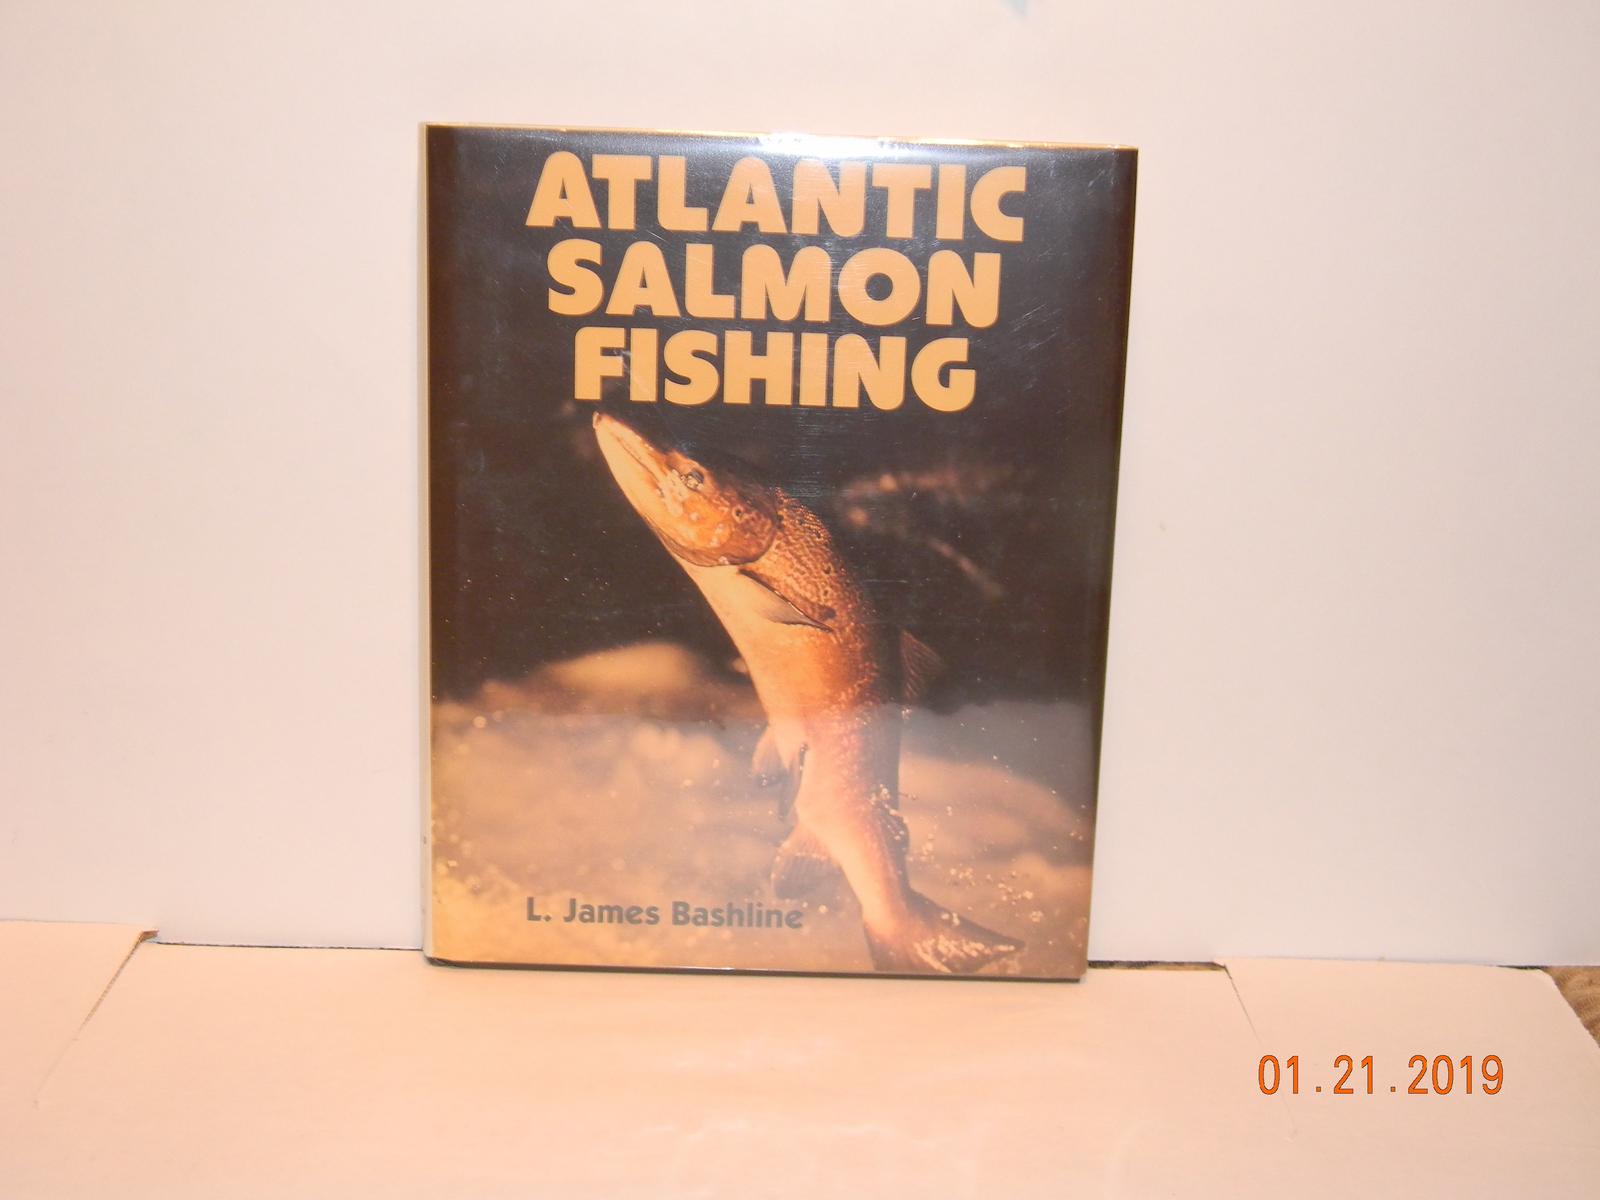 Atlantic Salmon Fishing book by L. James Bashline